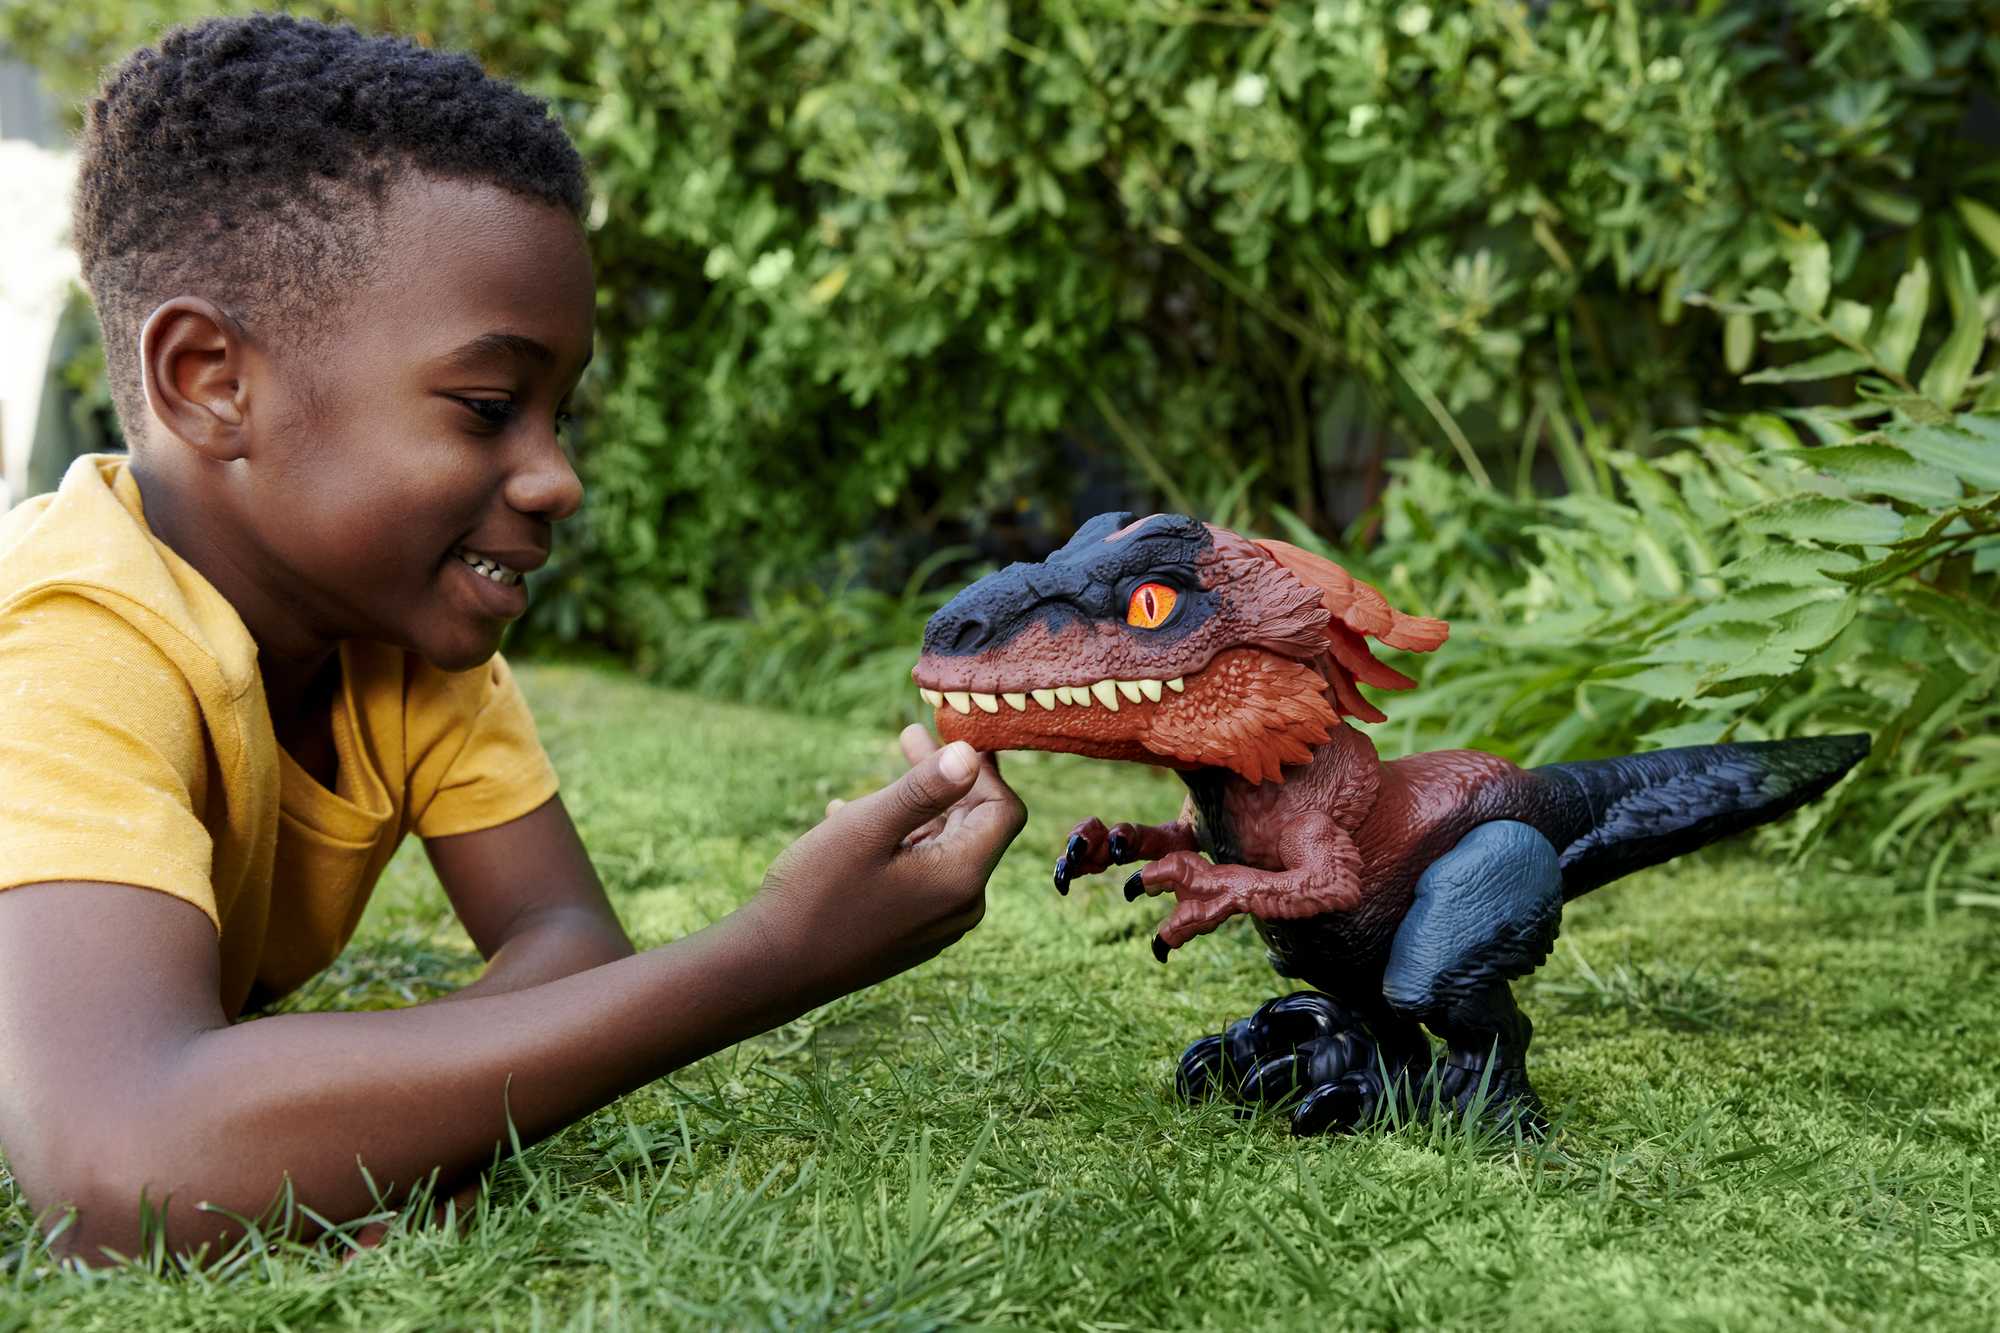 Dinosaure Pyroraptor - Jurassic World Mattel : King Jouet